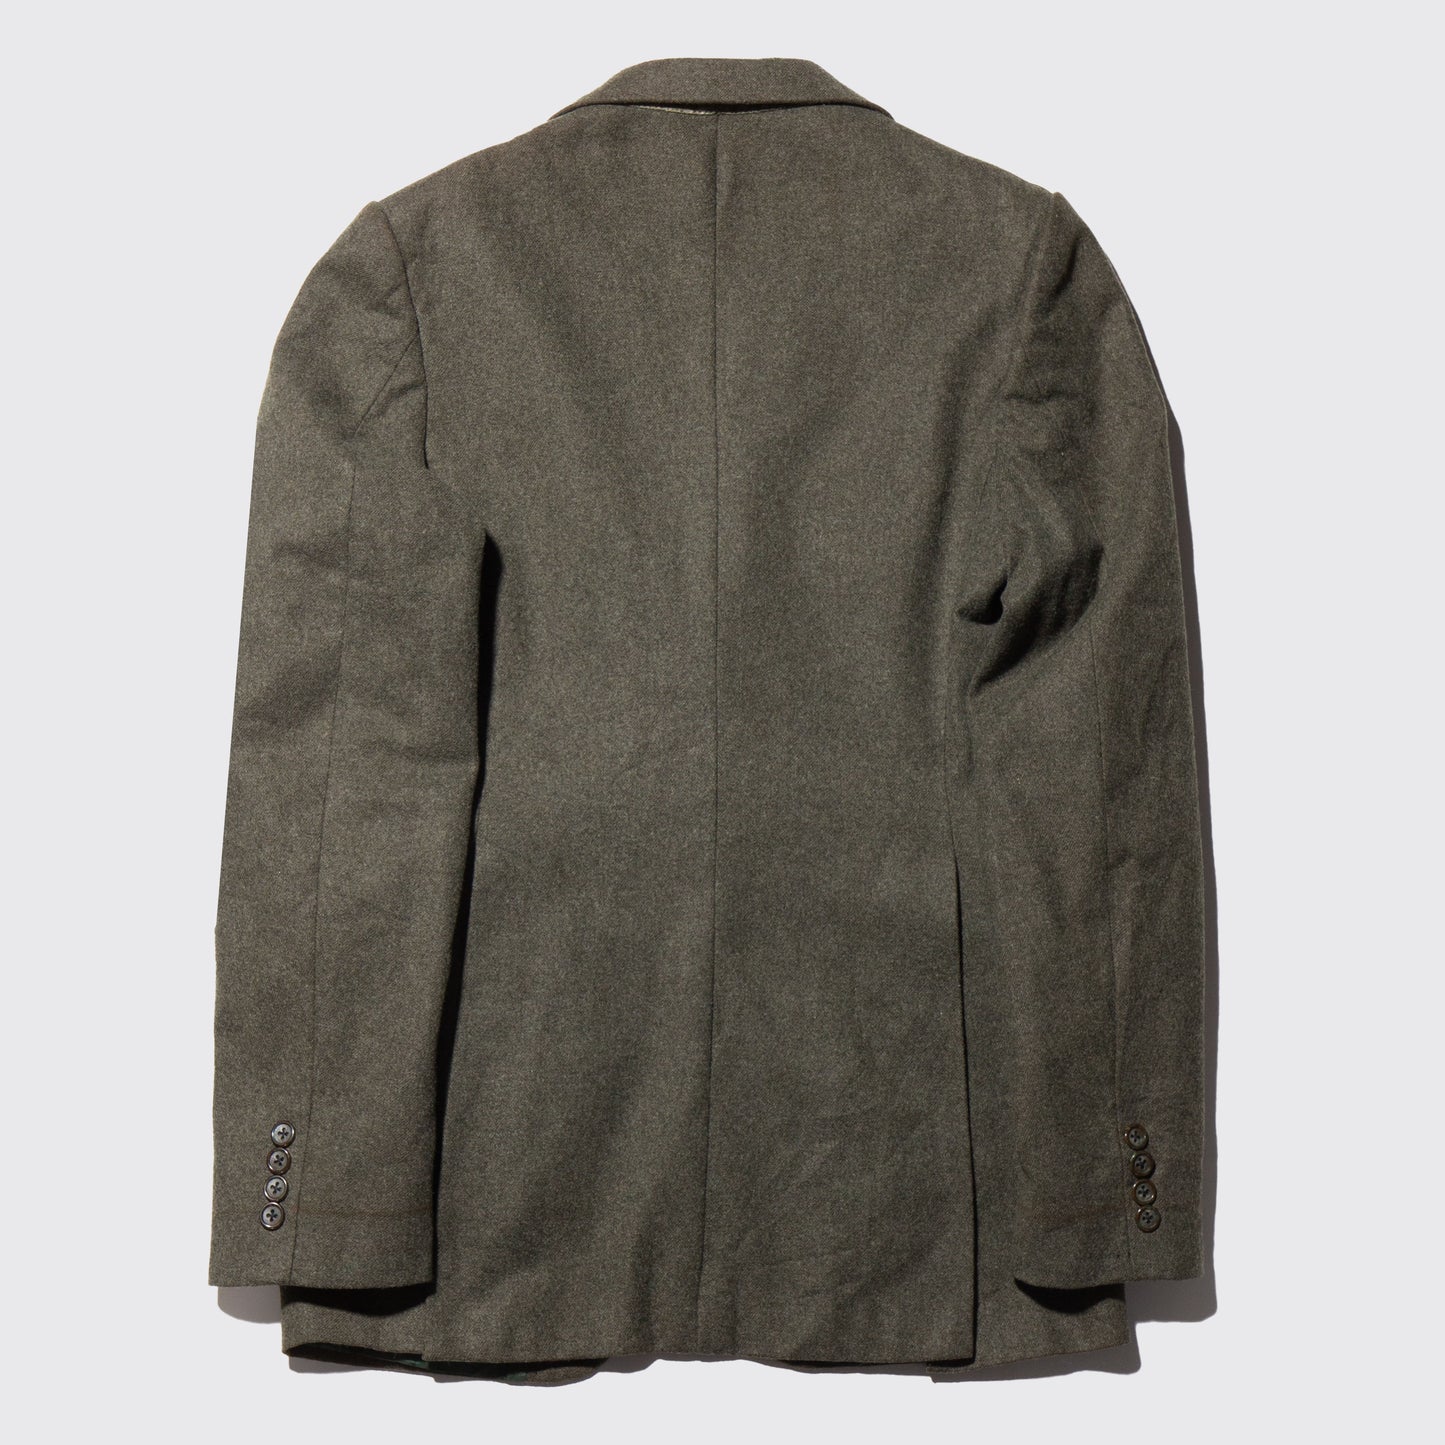 vintage 70's Yves Saint Laurent tailored jacket